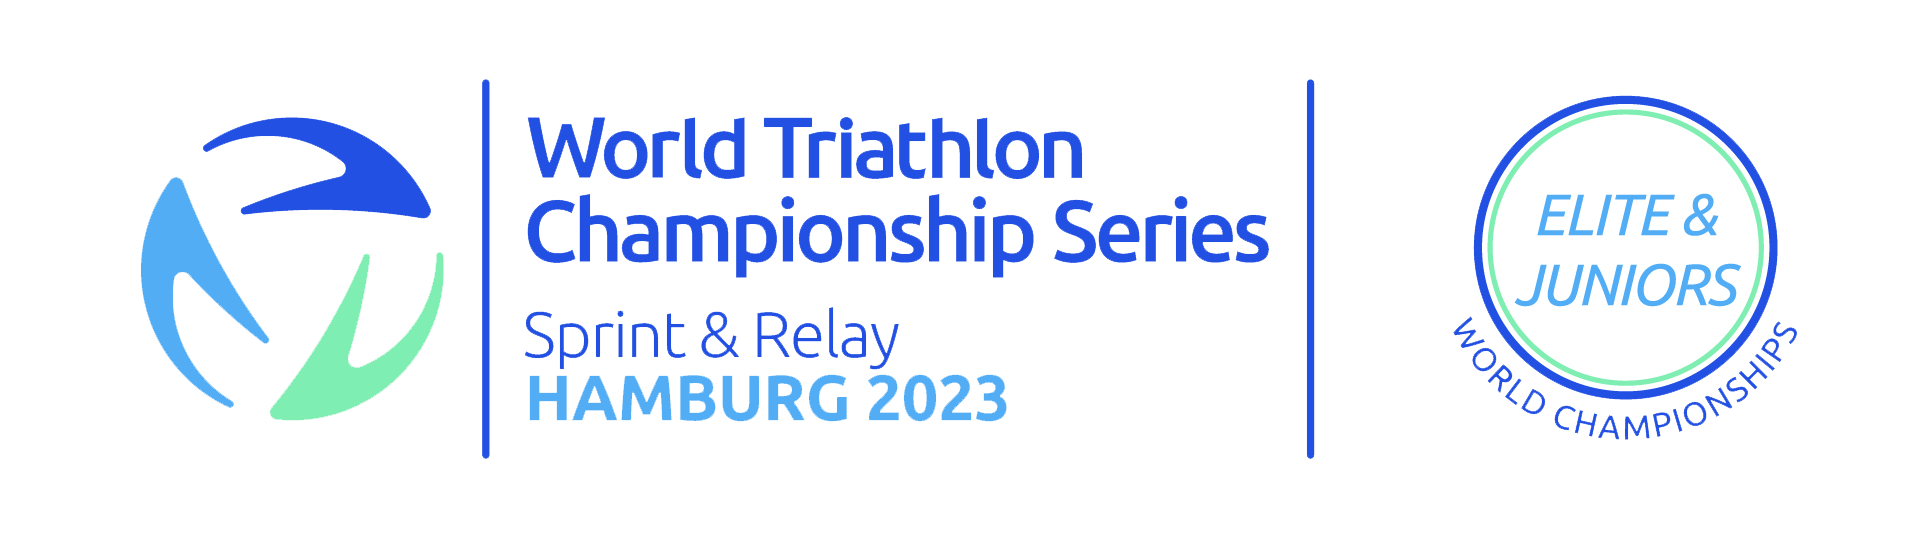 2023 World Triathlon Championships, Hamburg